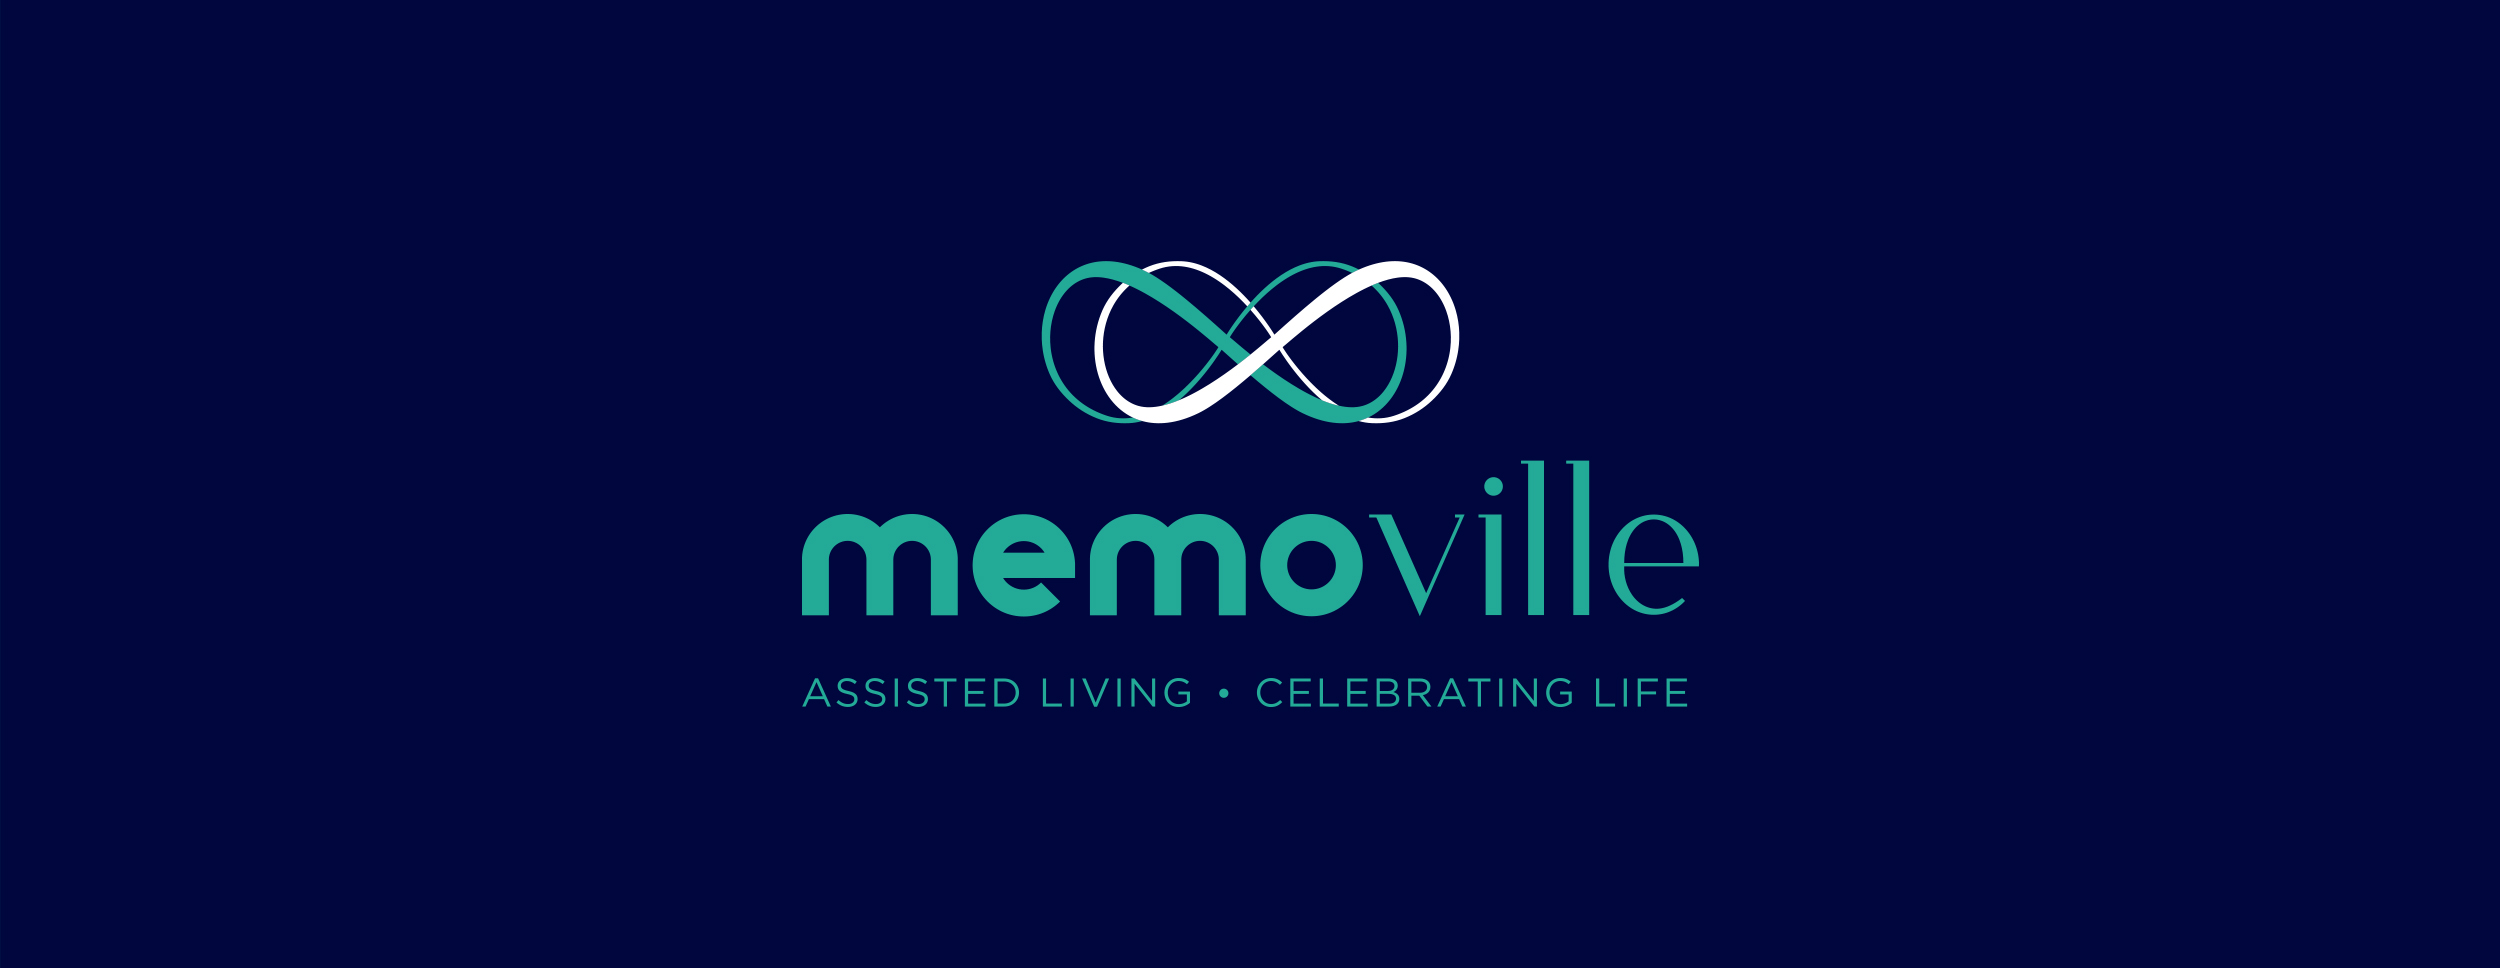 memoville-rebranding-logo